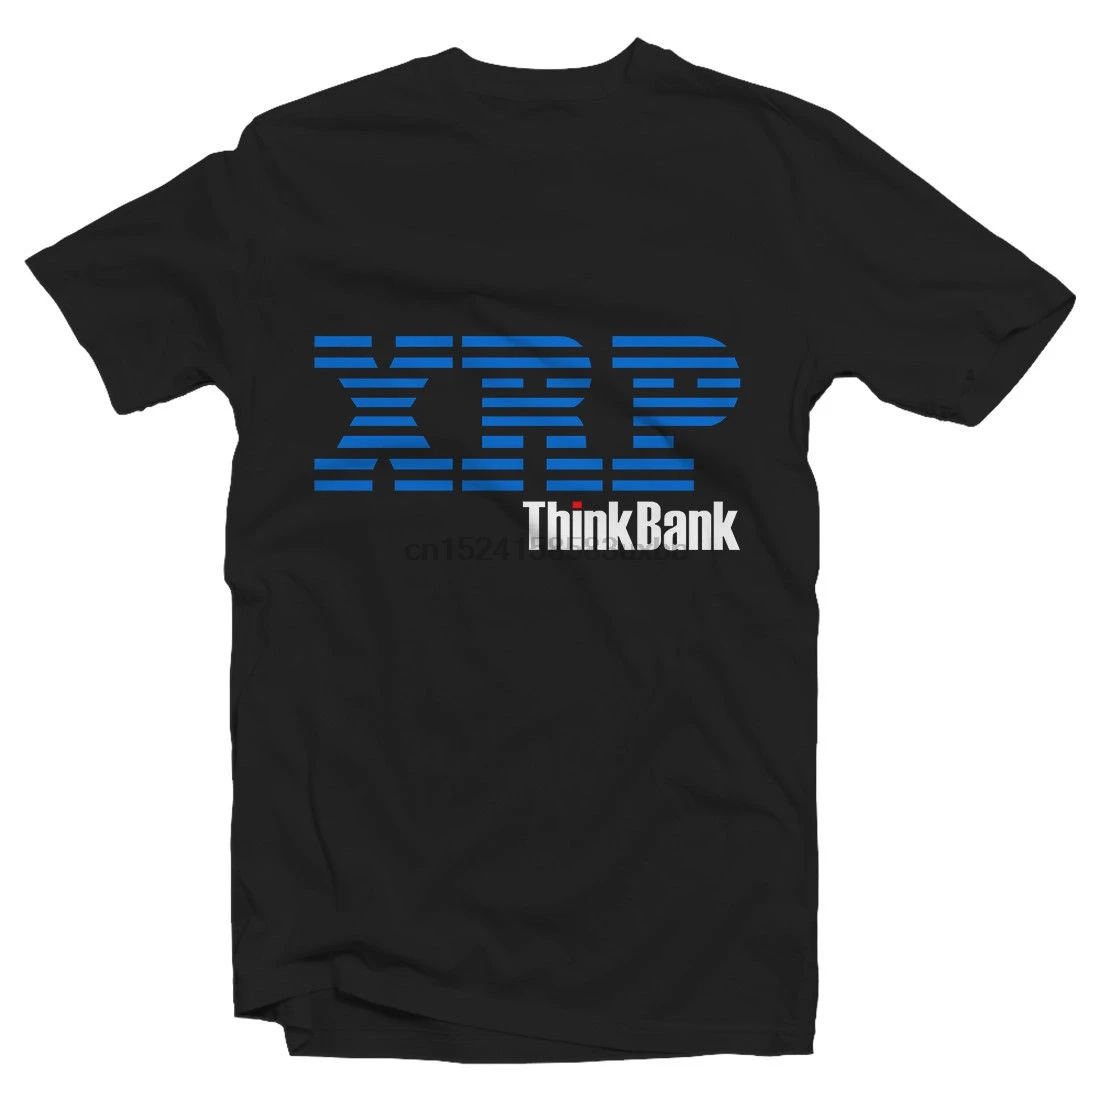 T-Shirt Bank. Футболка Bank. ТБС банк футболки. Think bank